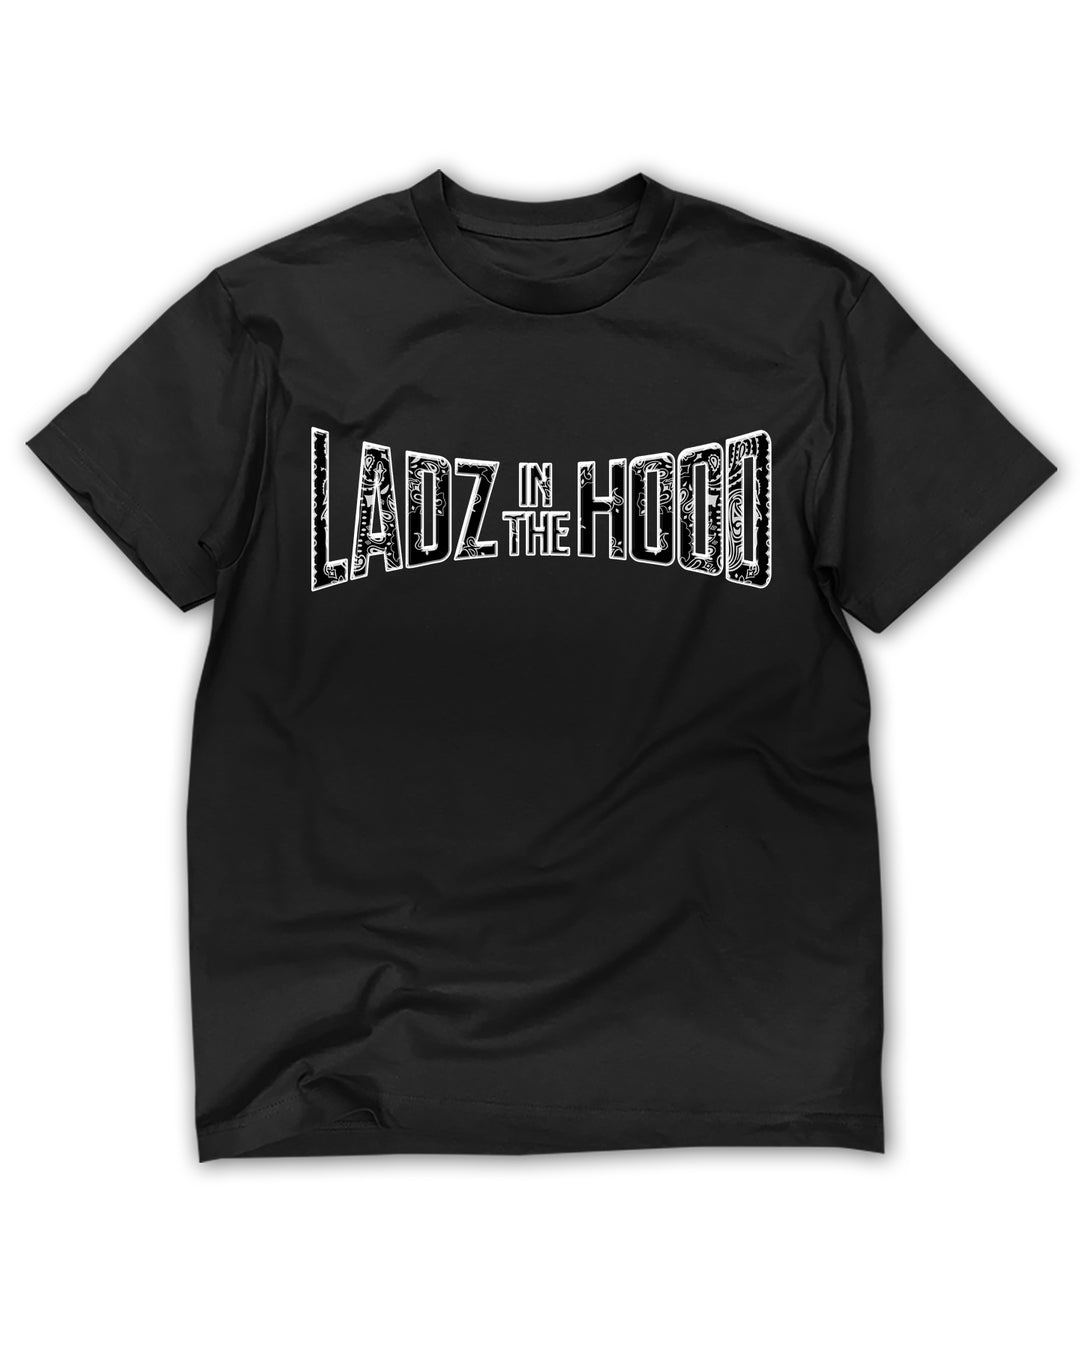 Ladz in the Hood Tee - Black